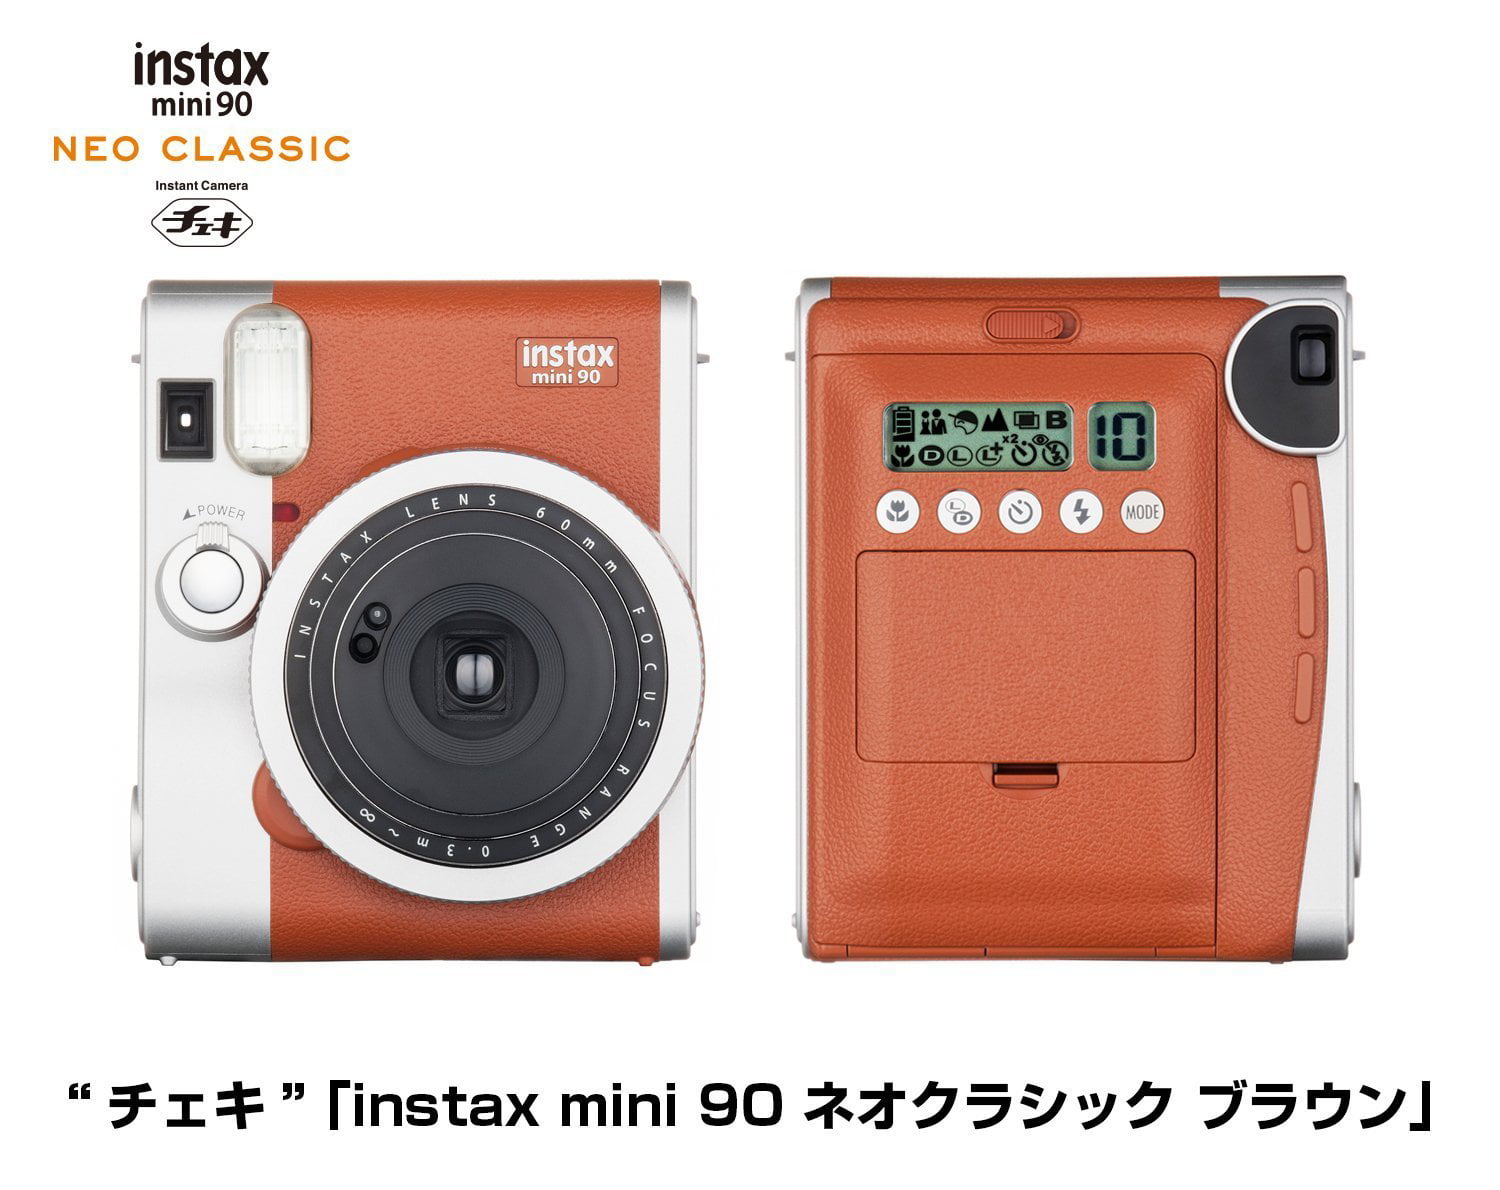 Fujifilm Instax Mini 90 Neo Classic Instant Film Camera (Brown) + Instax Film Twin Pack (20PK) + Accessories Kit / Bundle + Fitted Case + Filter Lens + Frames + Photo Album + - Walmart.com